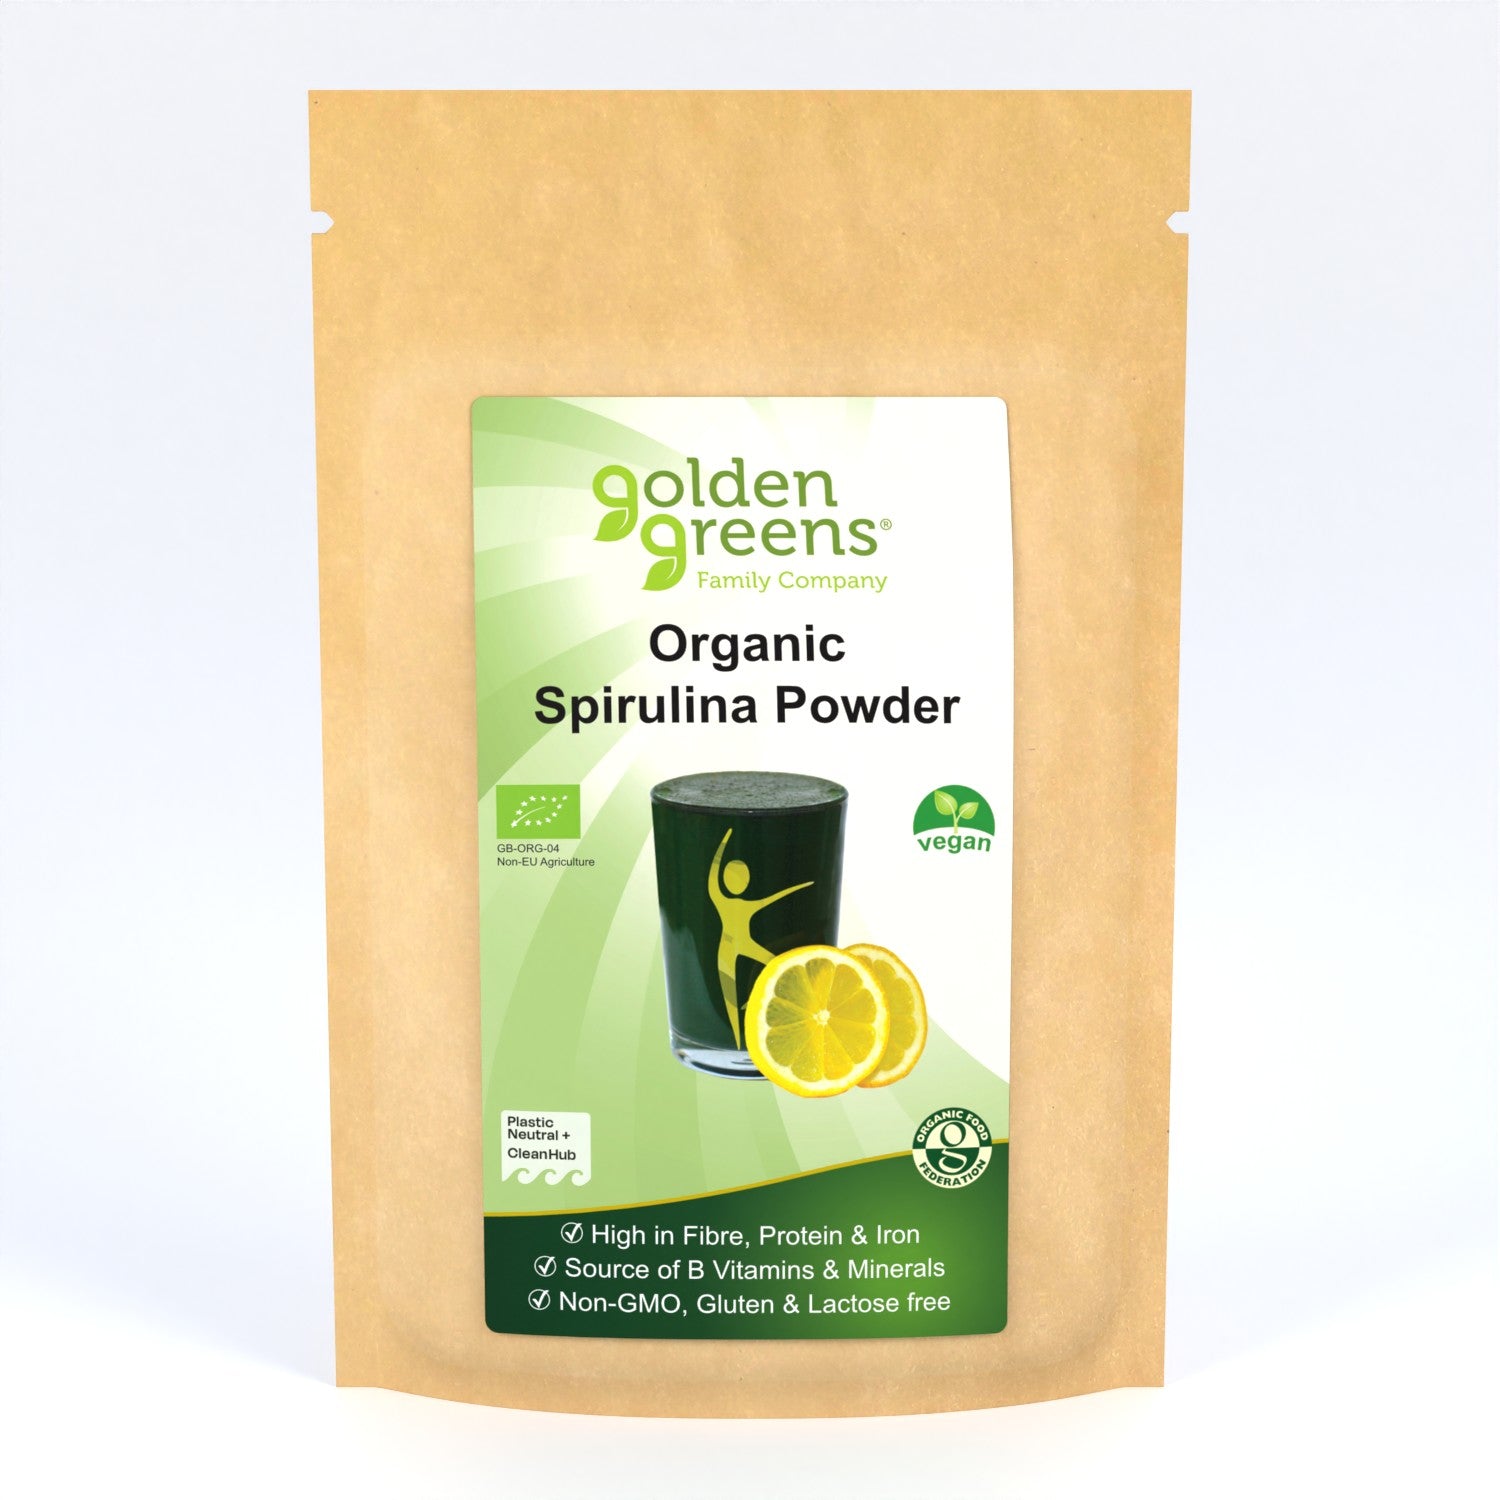 View Organic Spirulina Powder information